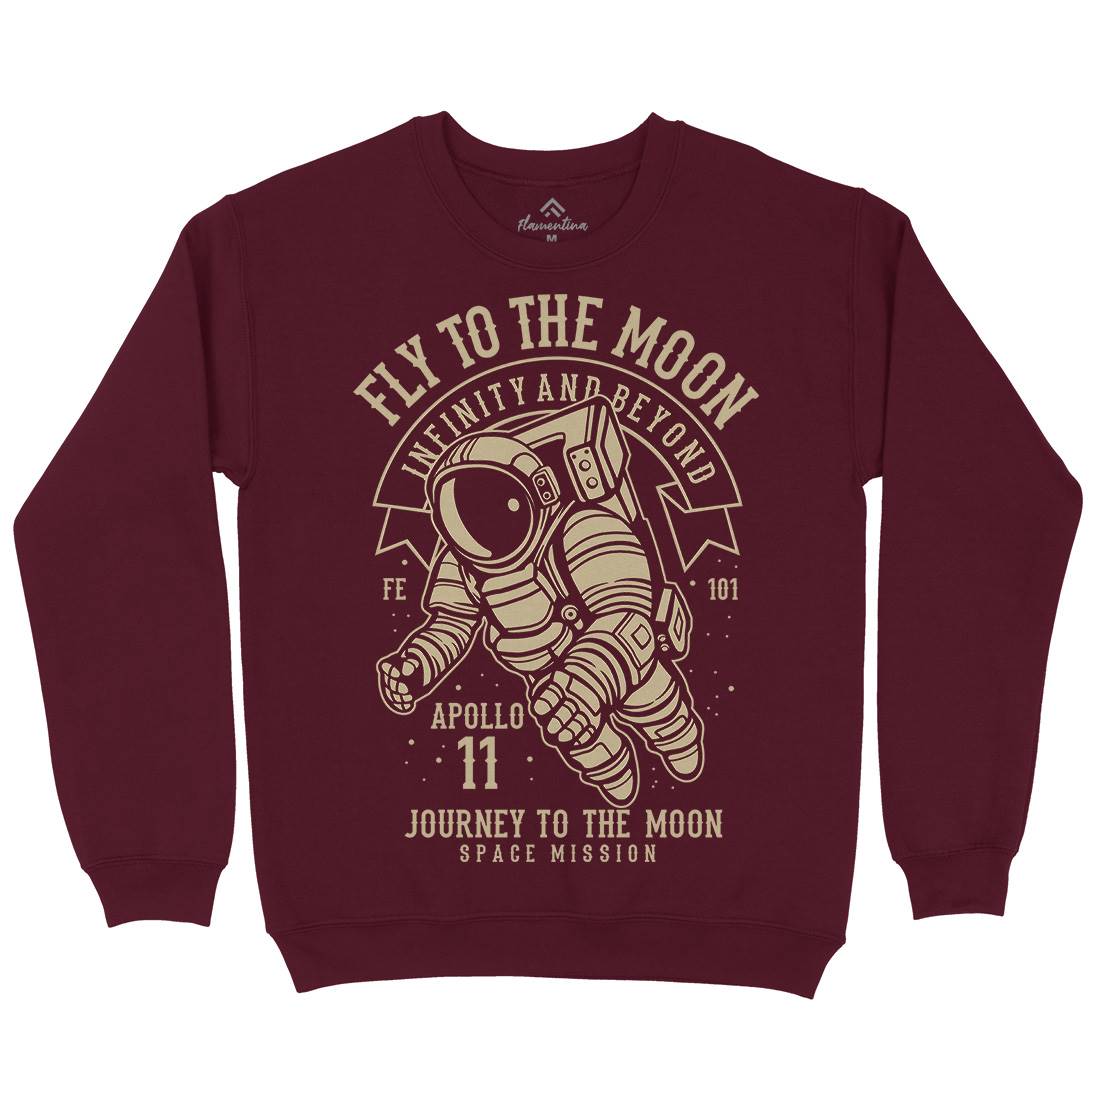 Fly To The Moon Kids Crew Neck Sweatshirt Space B210